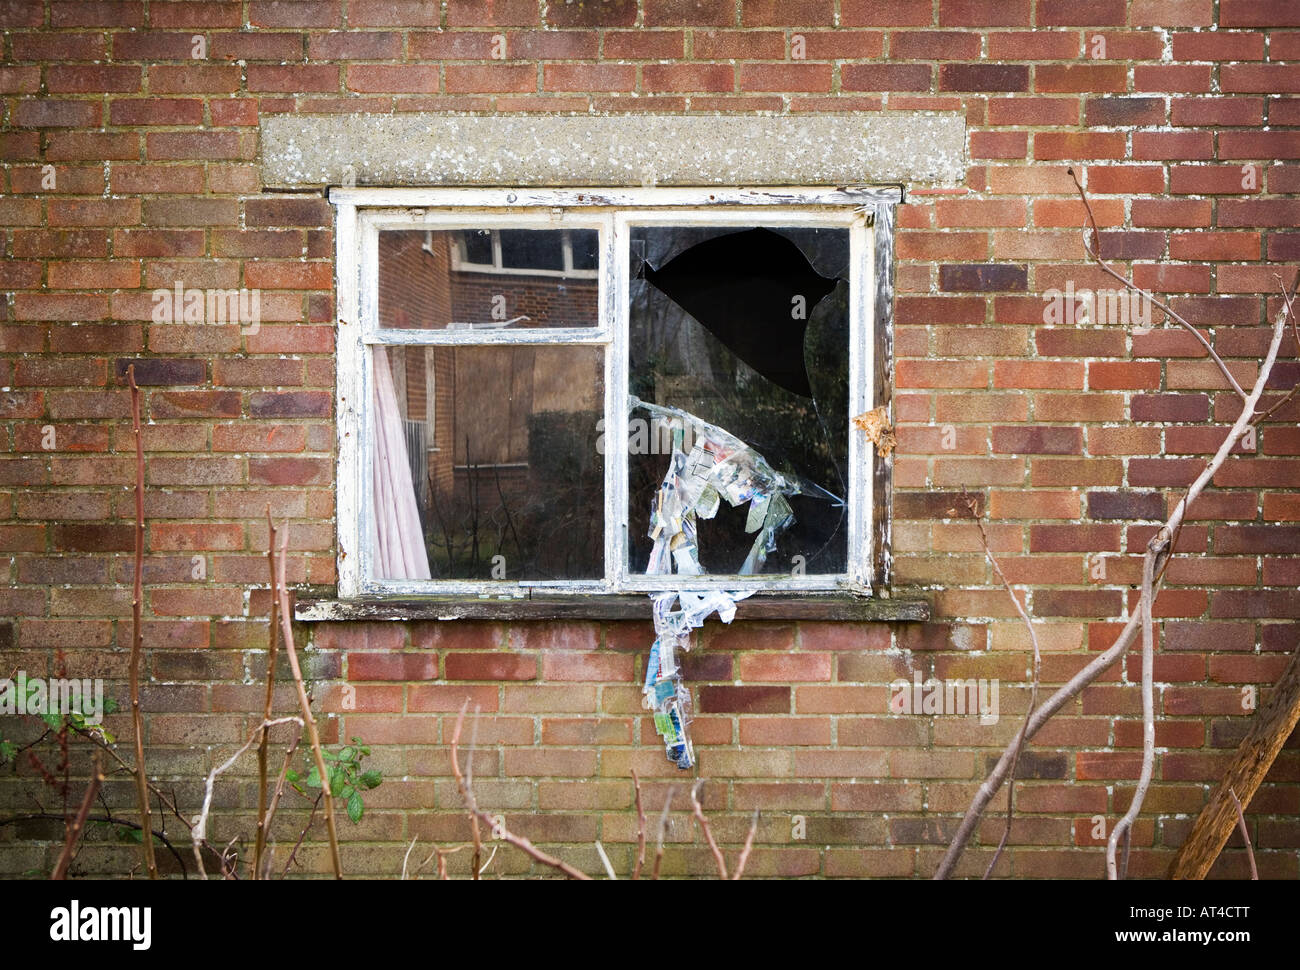 Vandlised disused brick building shot in the uk Stock Photo